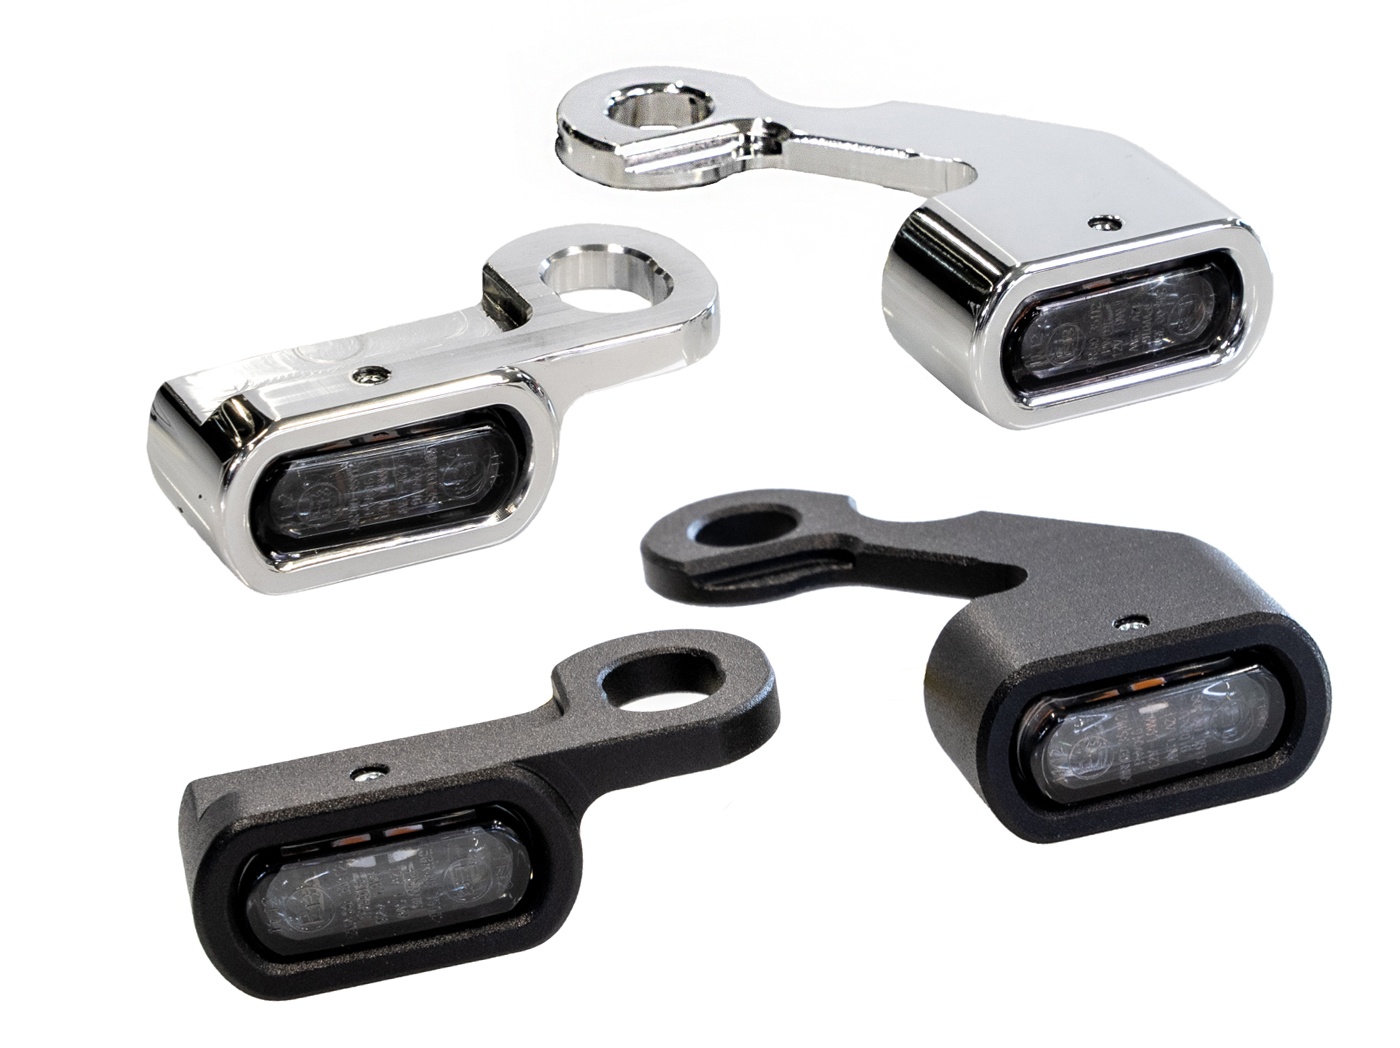 Daytona Japan USB, Steckdosen & Ladevorrichtungen im Thunderbike Shop